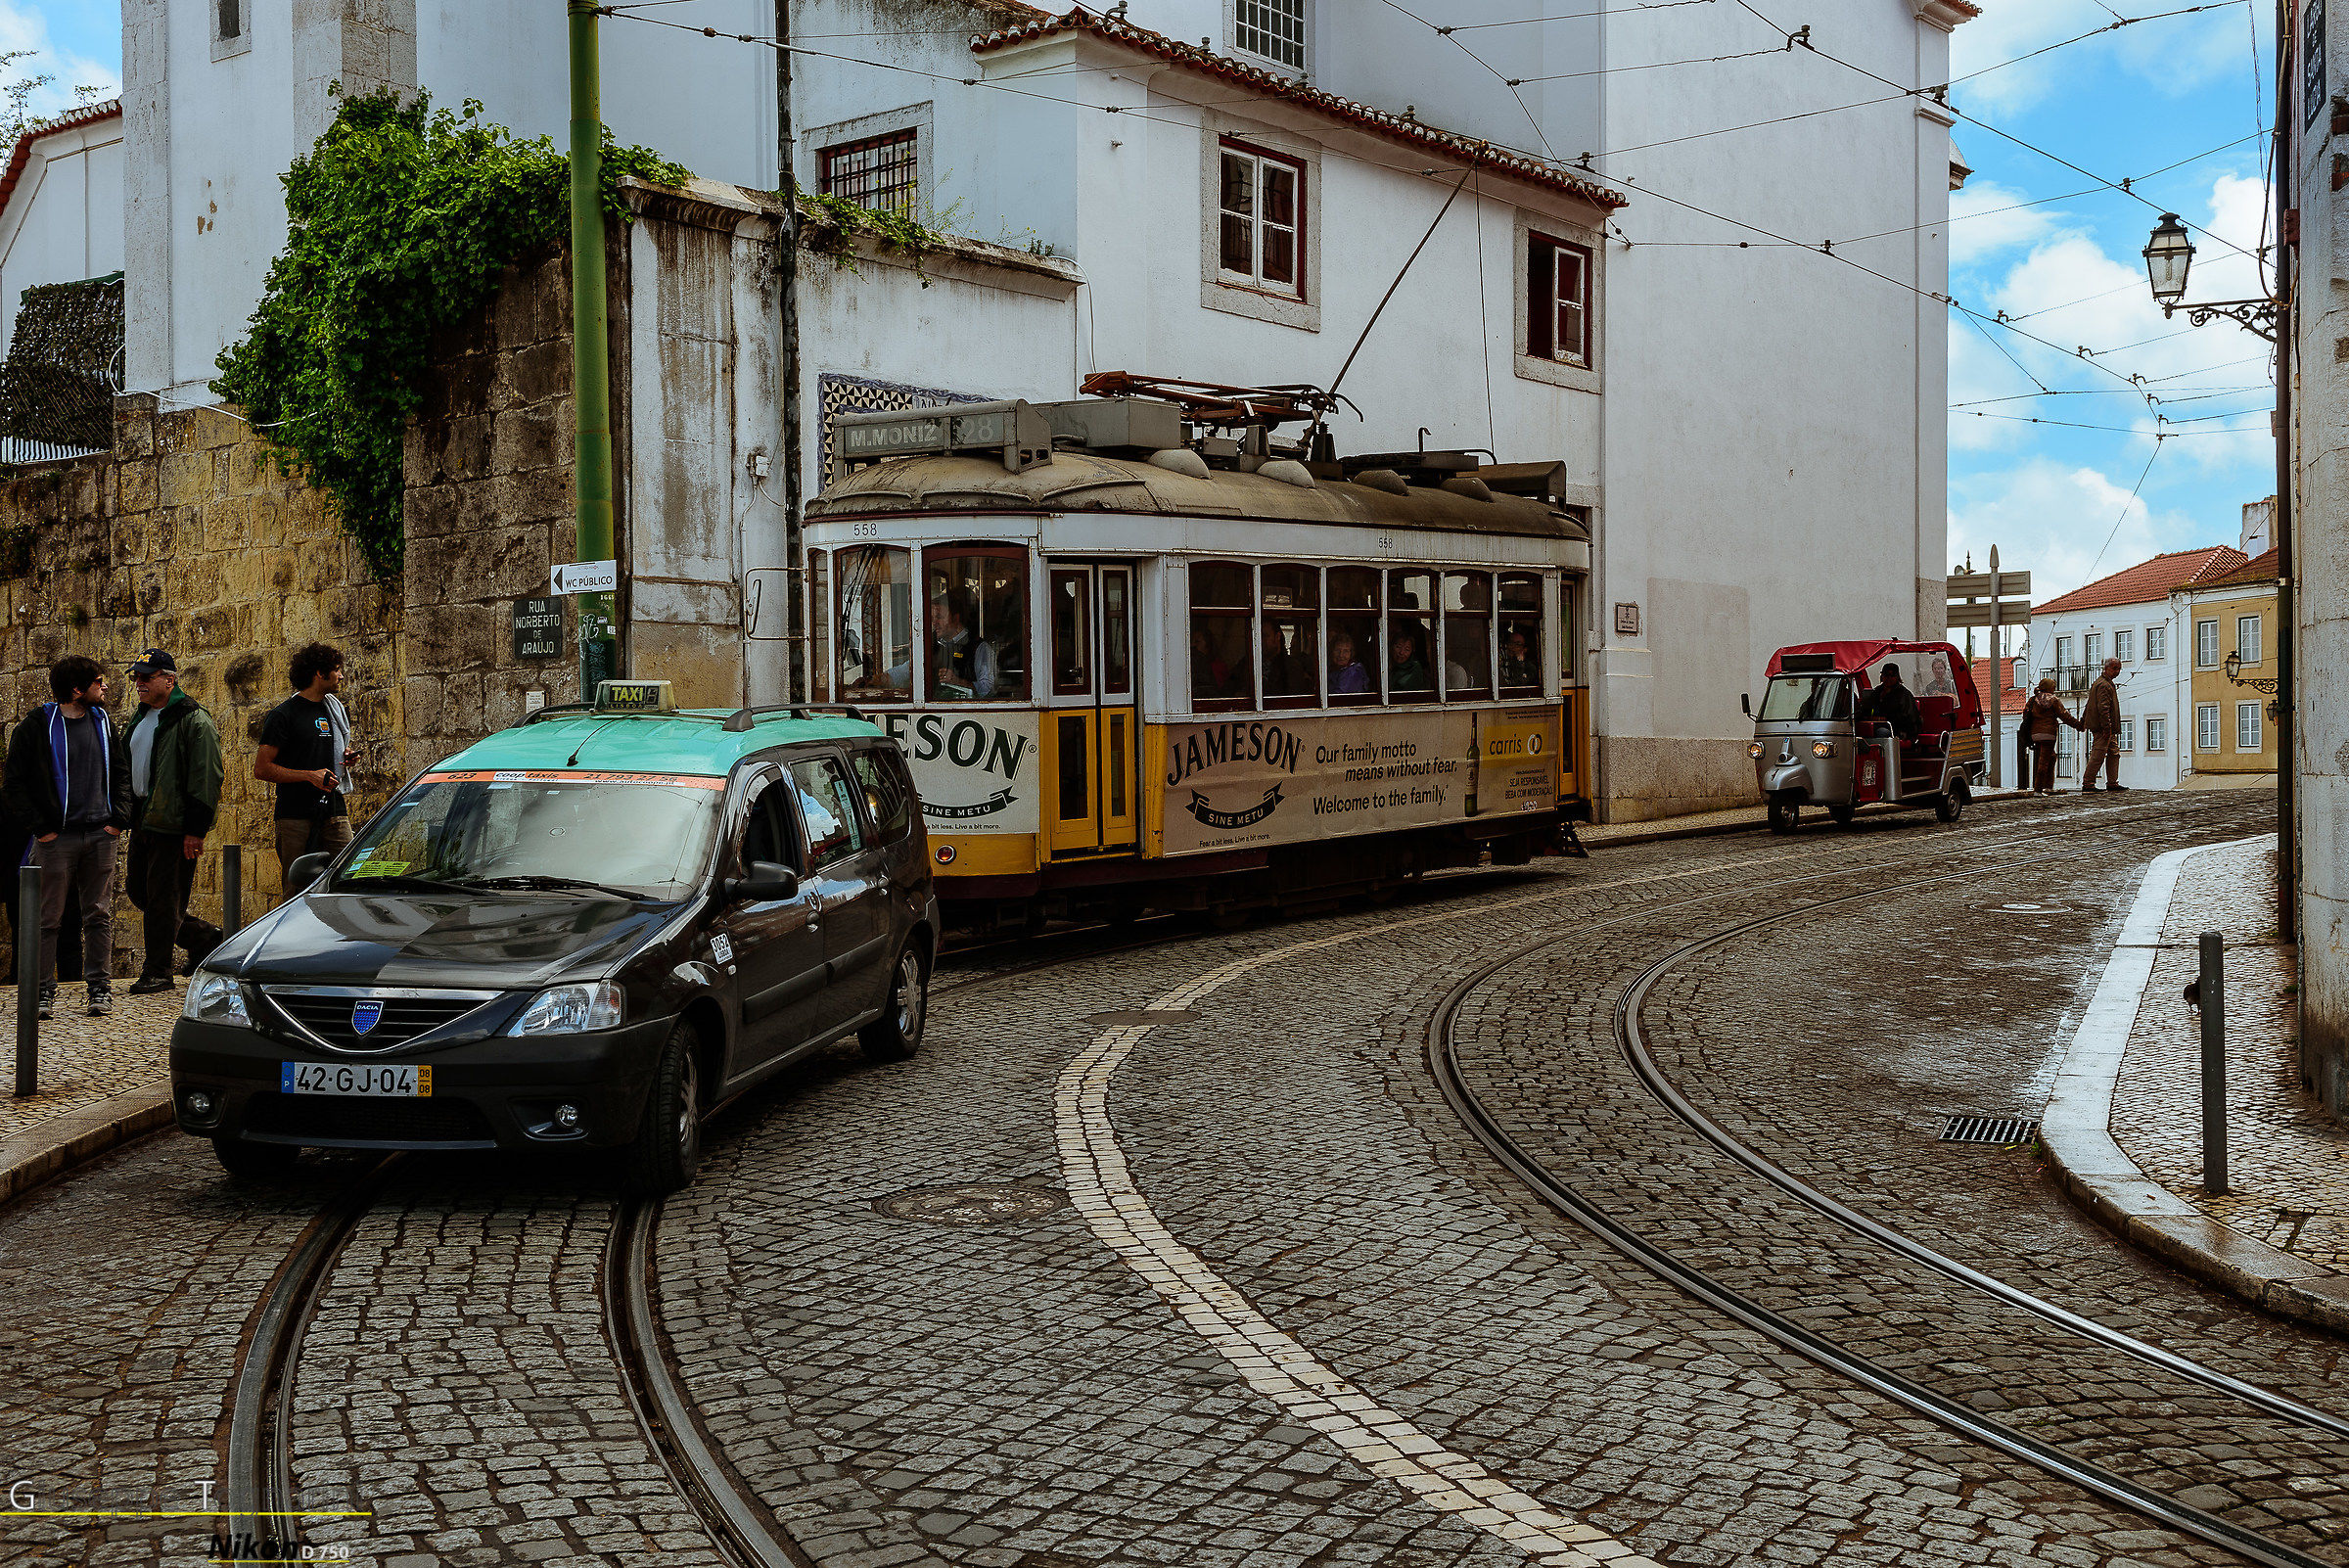 trasporto pubblico - Lisbona 2016...